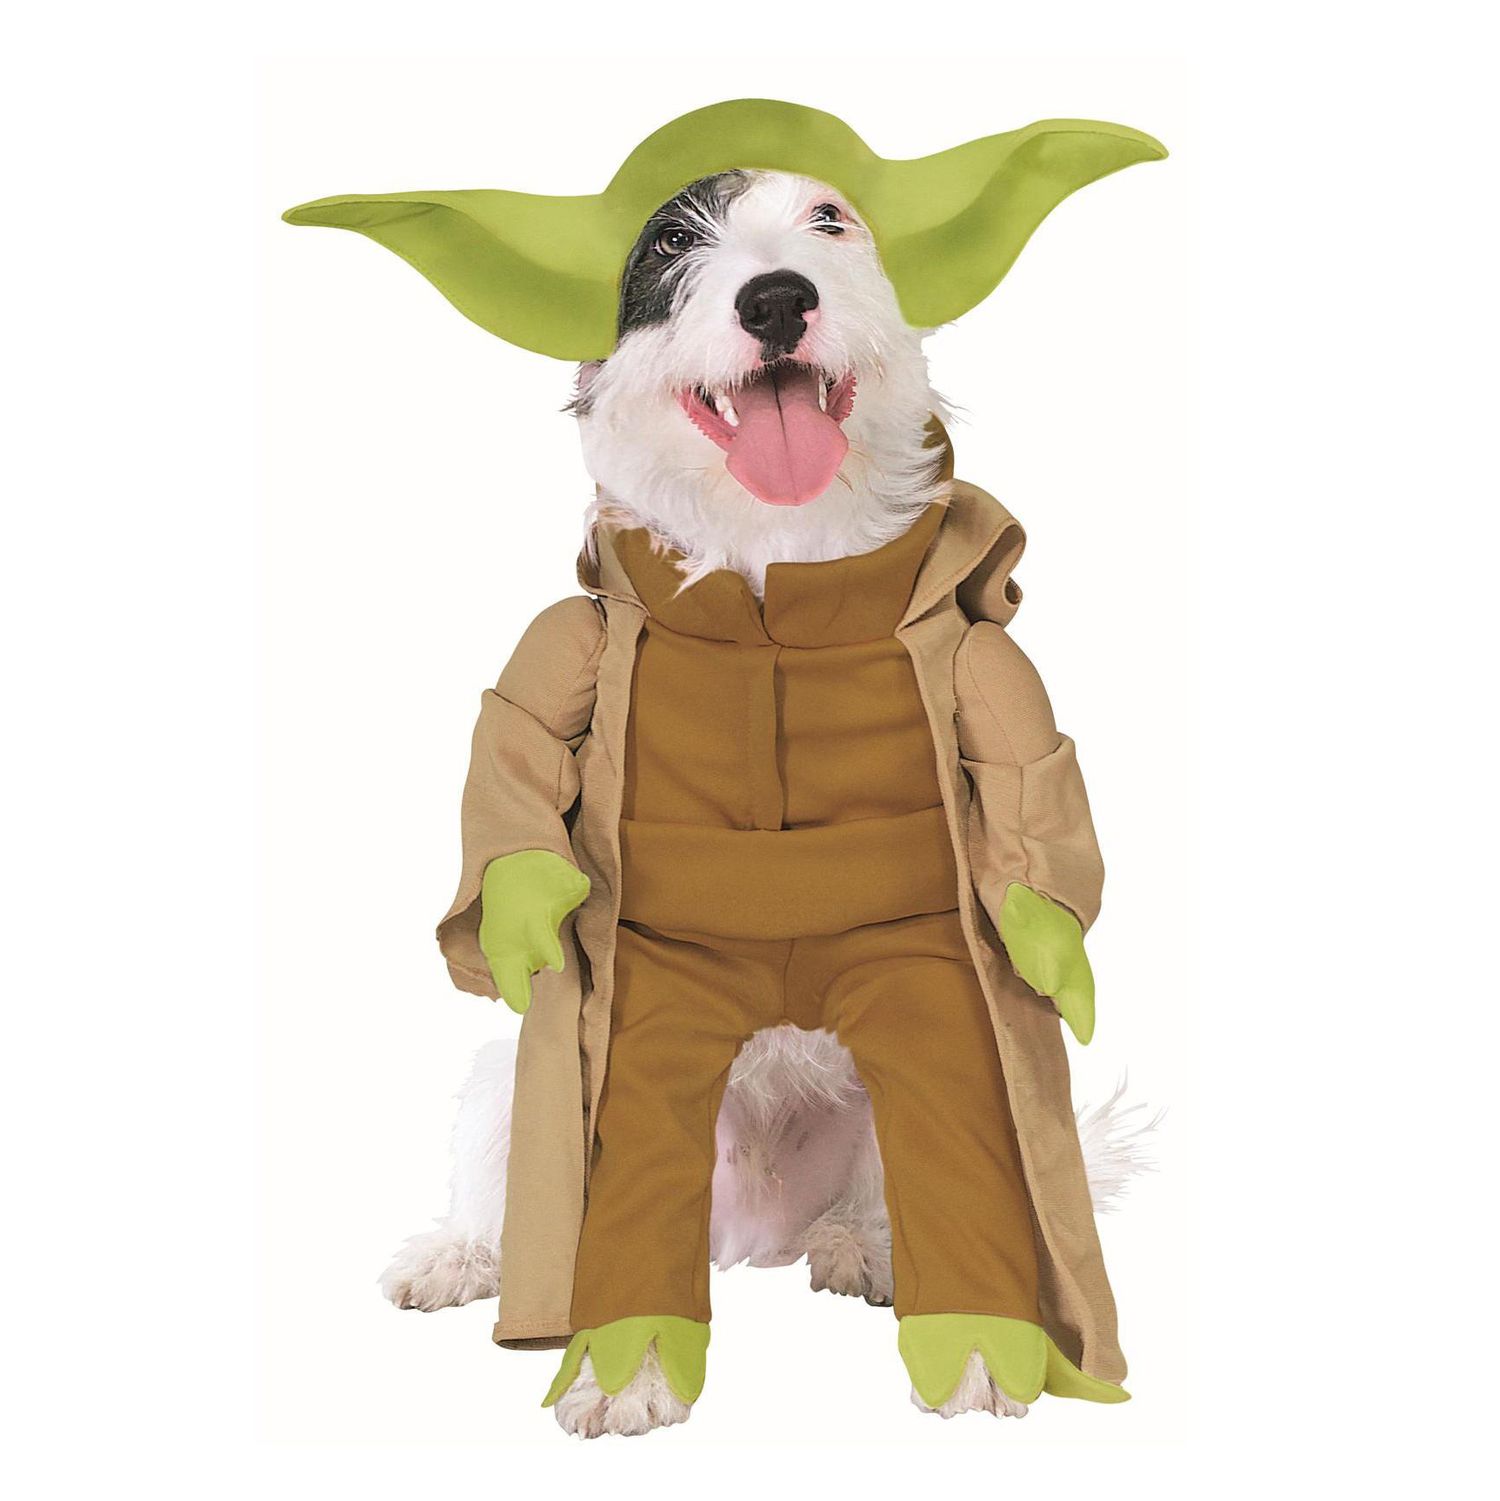 Dog wearing a Rubie’s Star Wars Yoda Costume on a white background